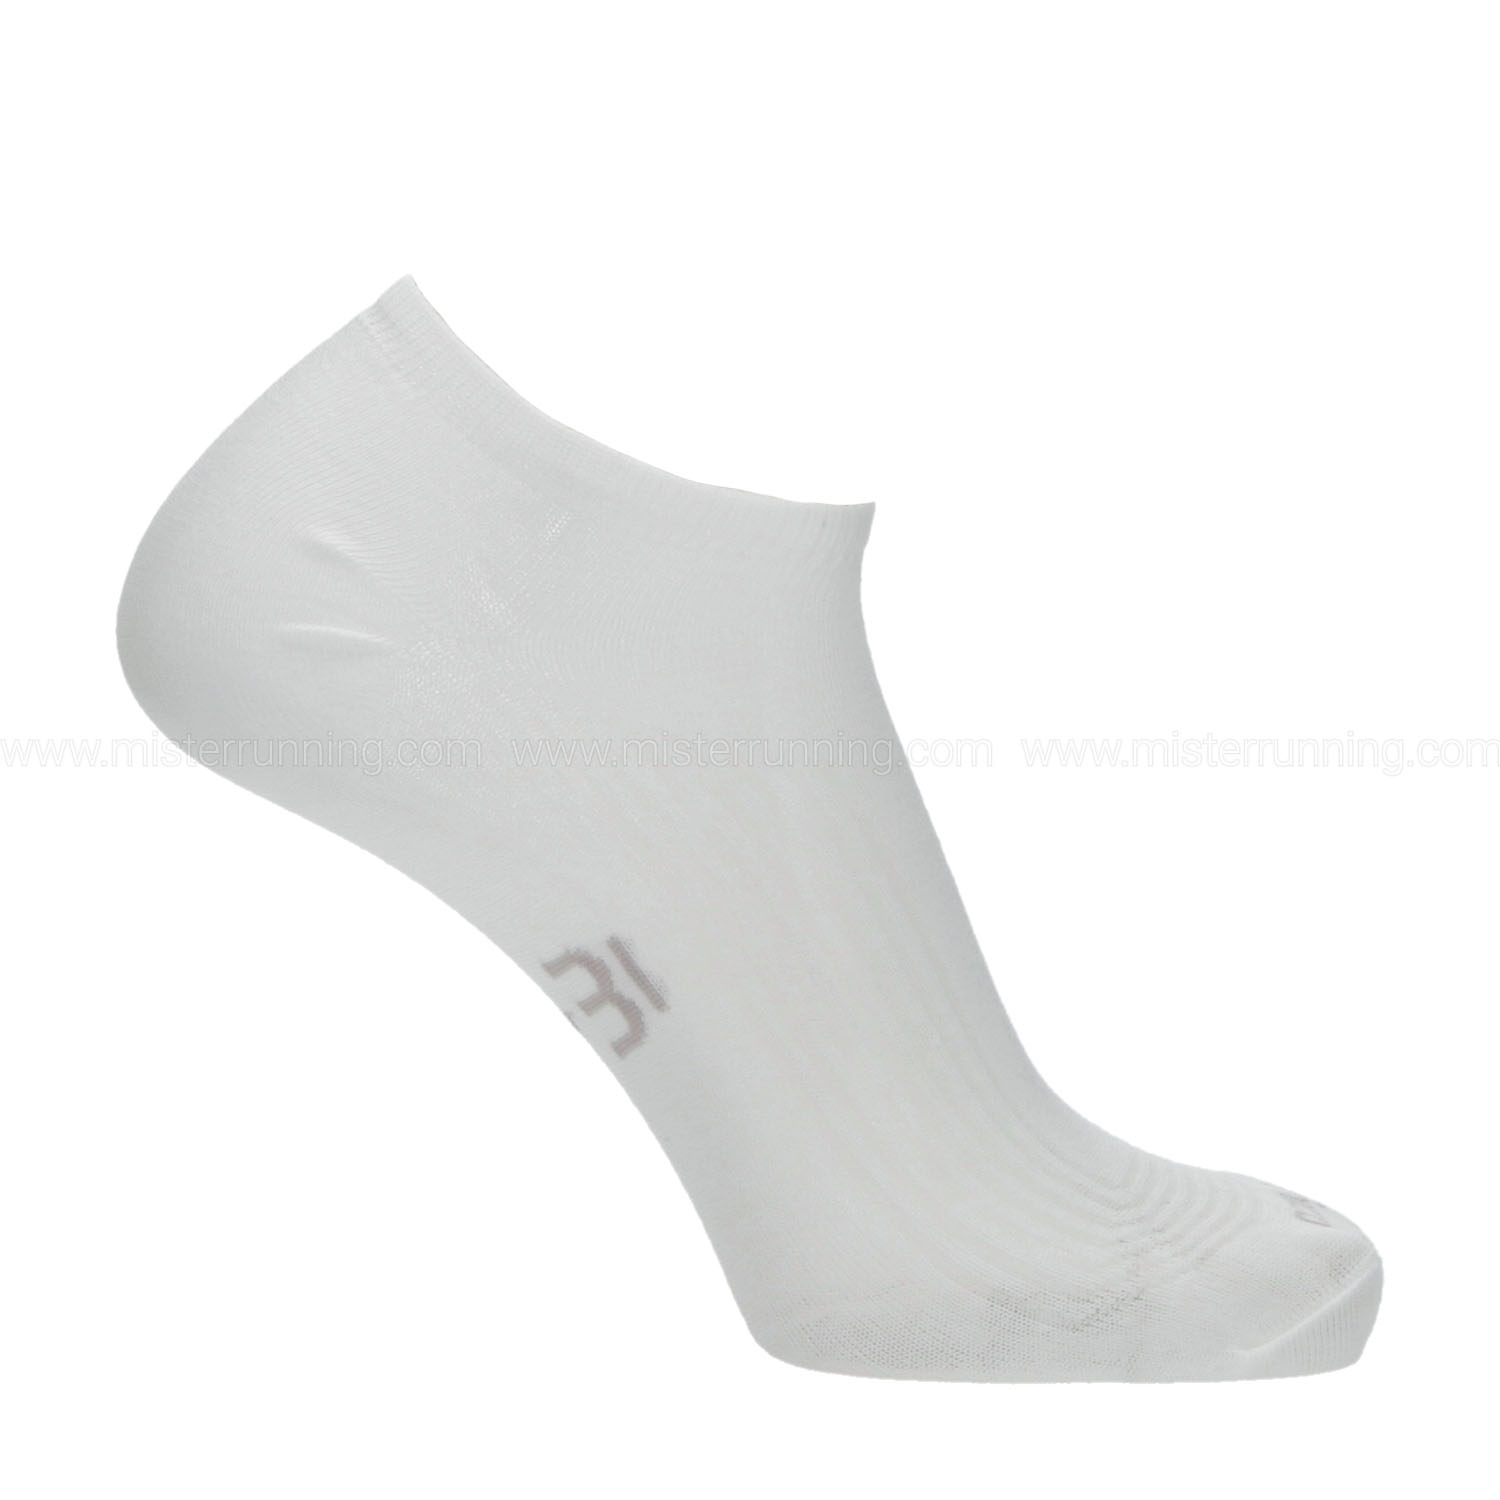 Mico Performance Socks - Bianco